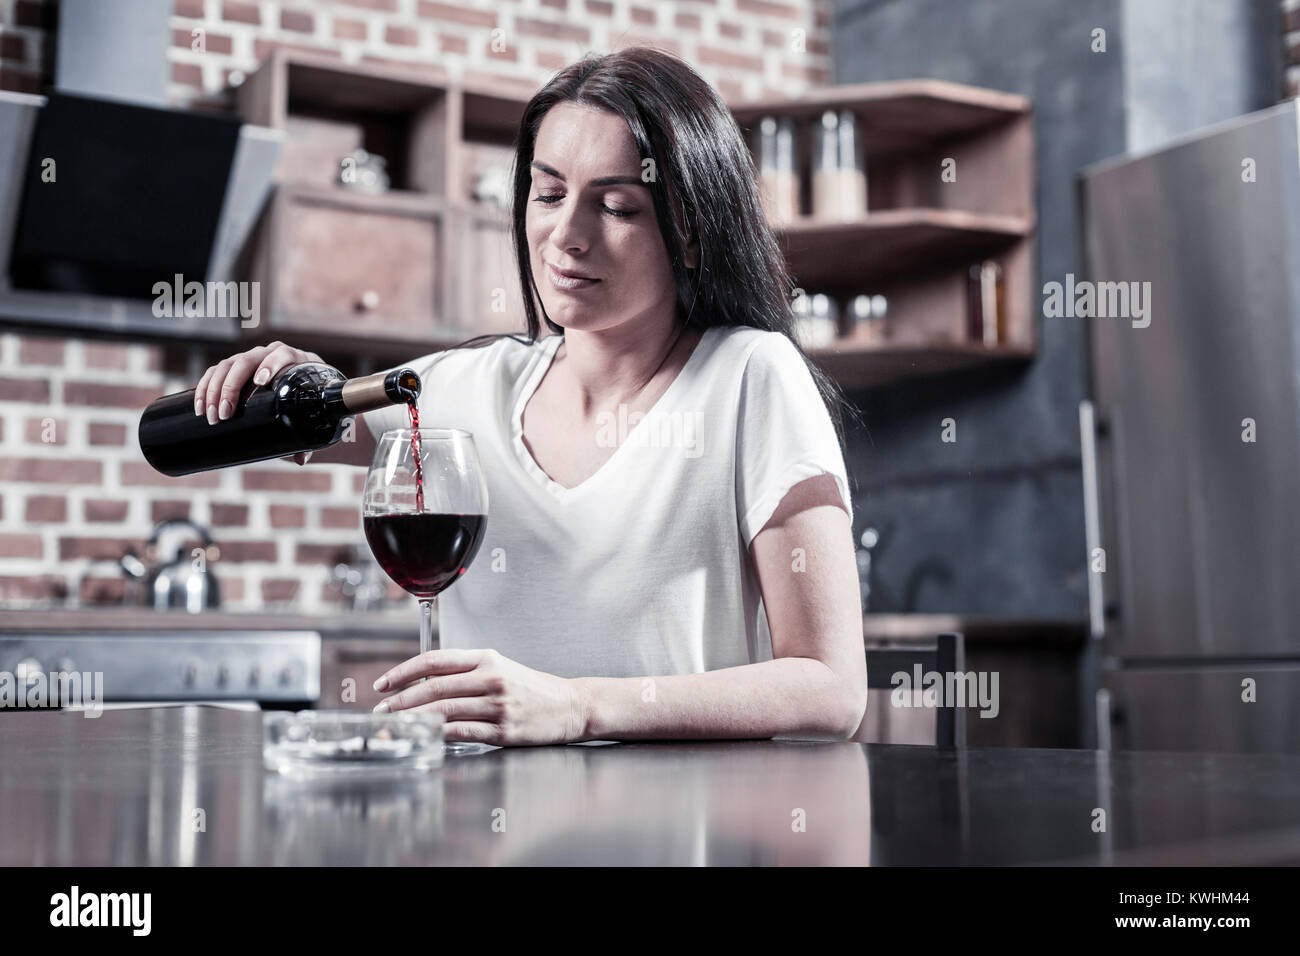 Sad brunette woman pouring wine Stock Photo